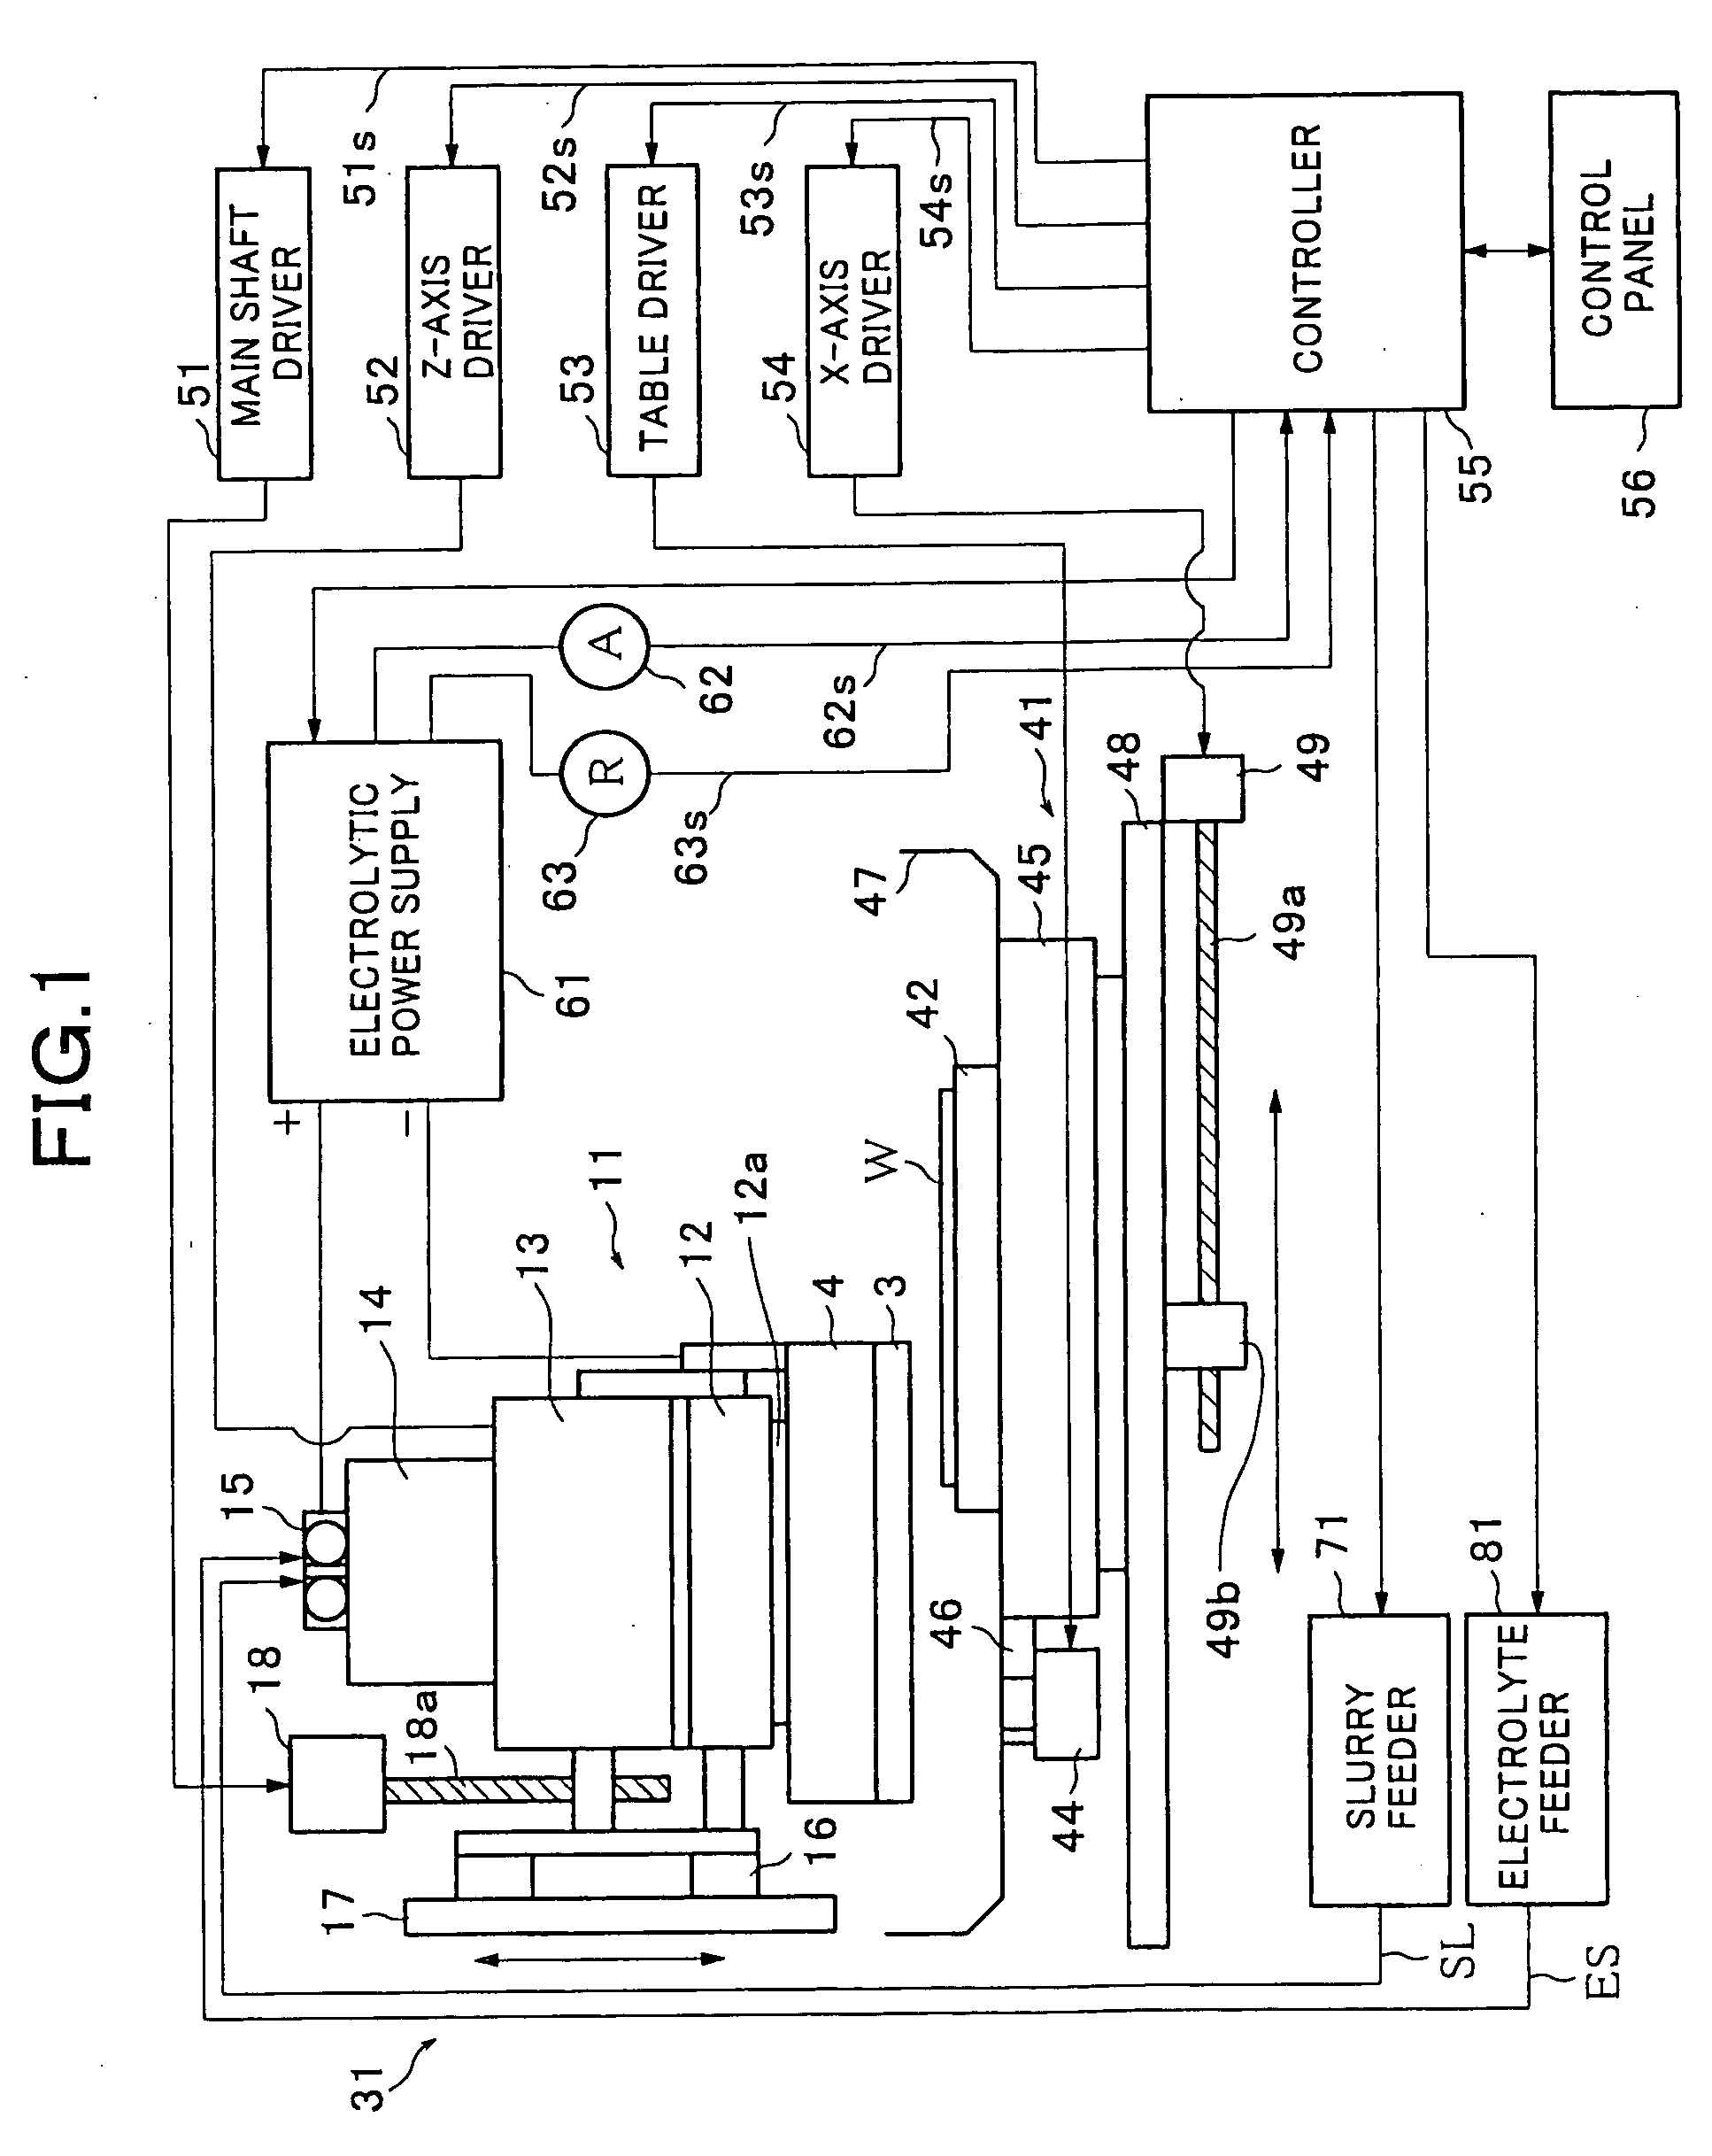 Method for producing semiconductor device, polishing apparatus, and polishing method